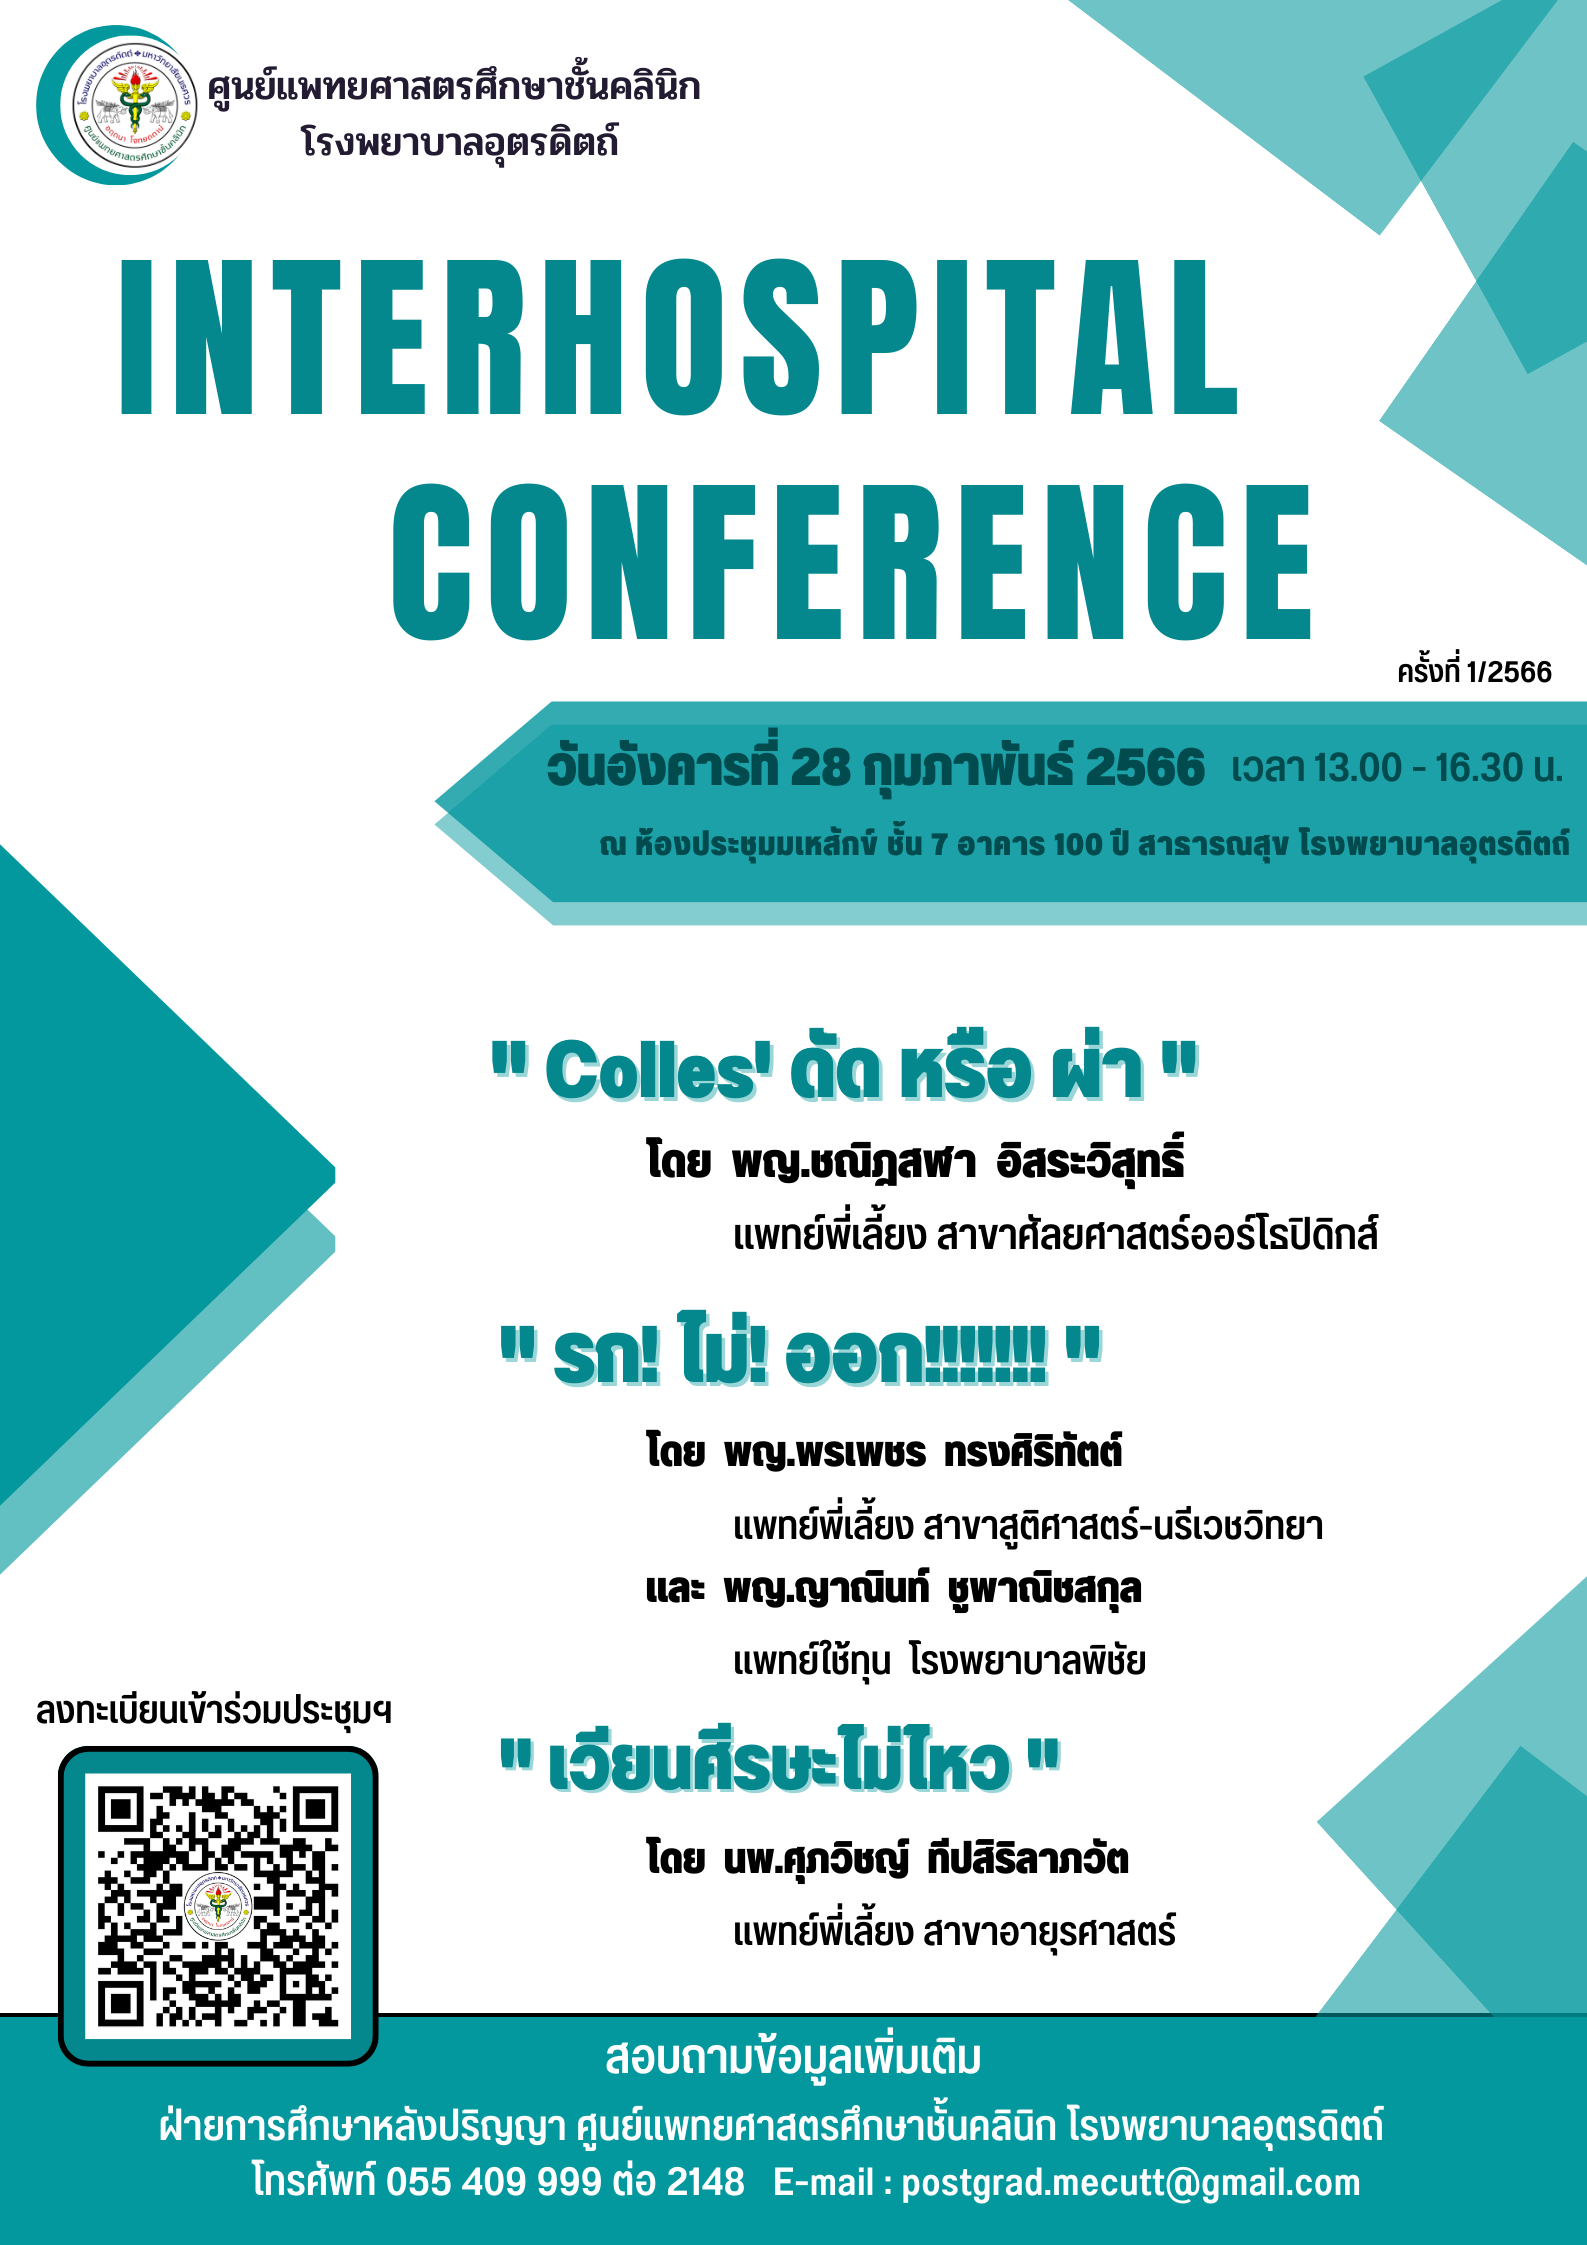 Interhospital conference ครั้งที่ 1/2566